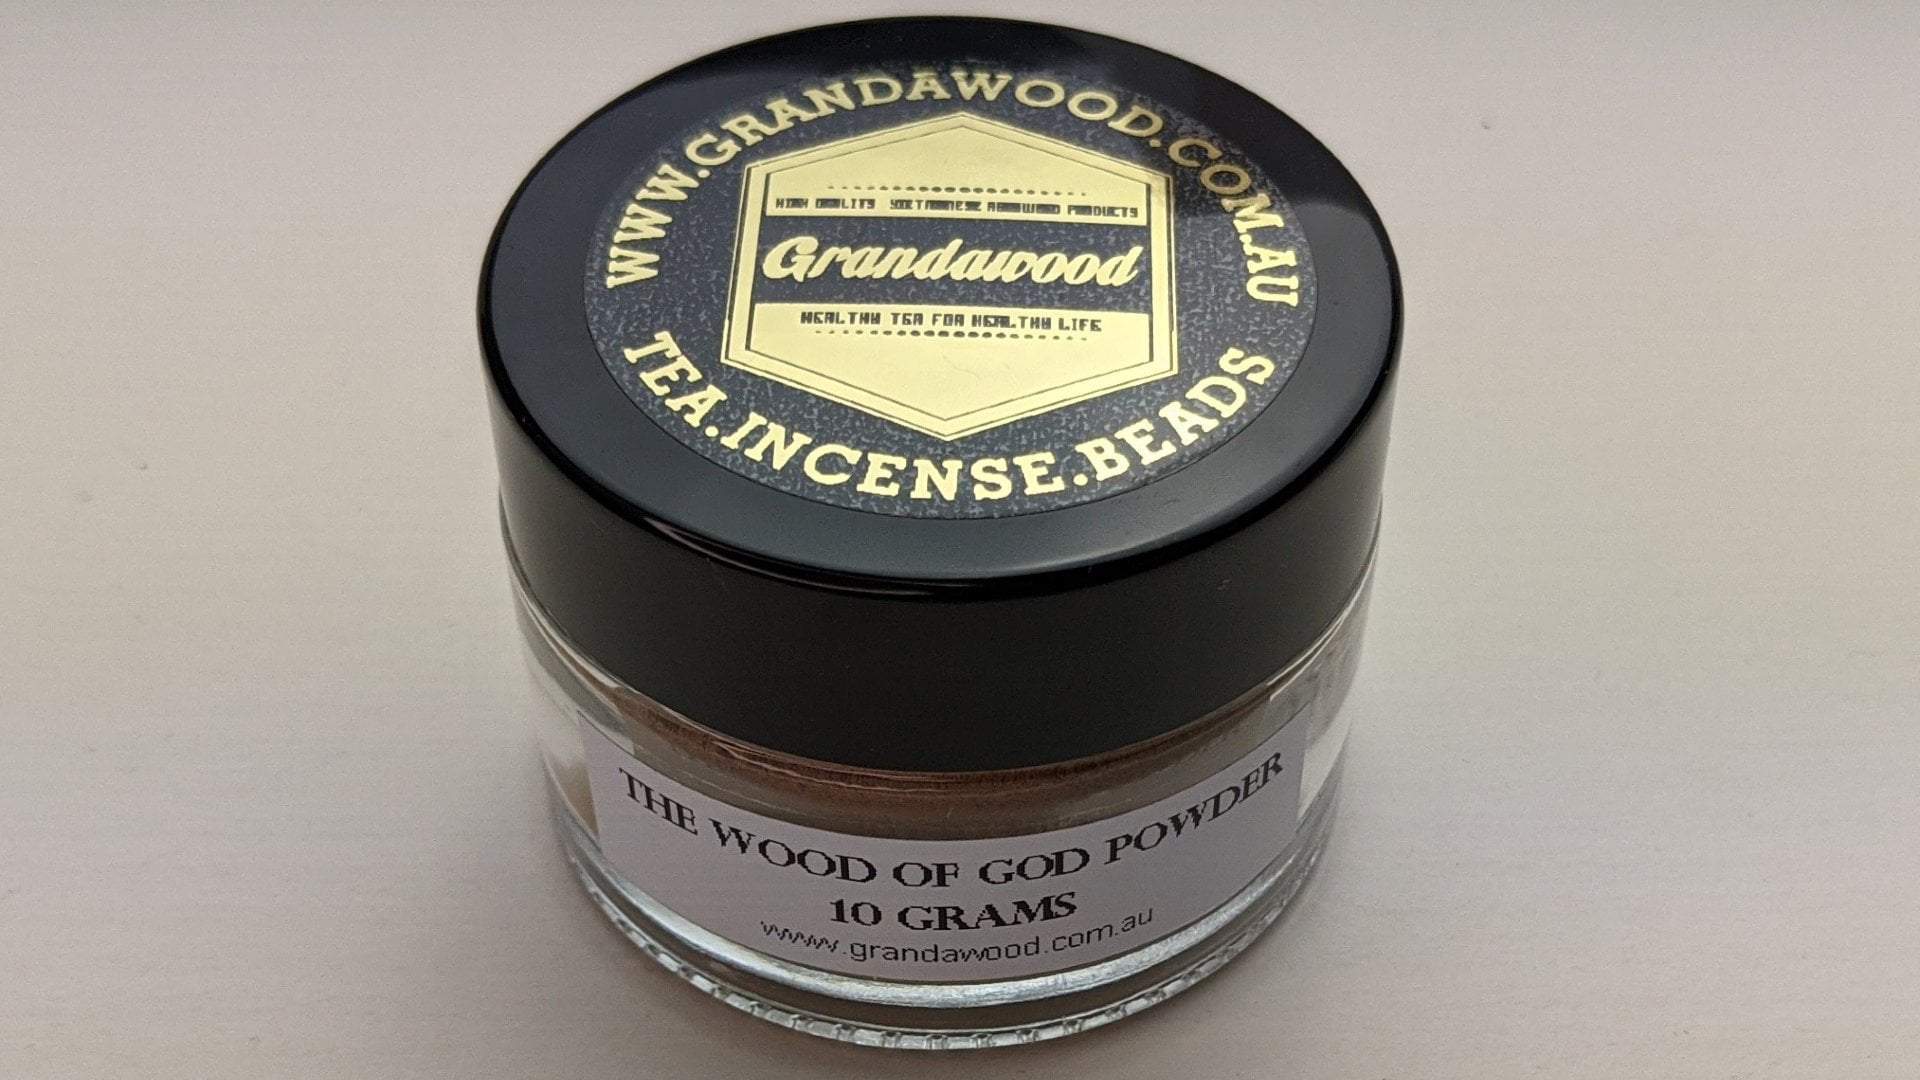 Wood of God Powder - Grandawood Agarwood - 10g